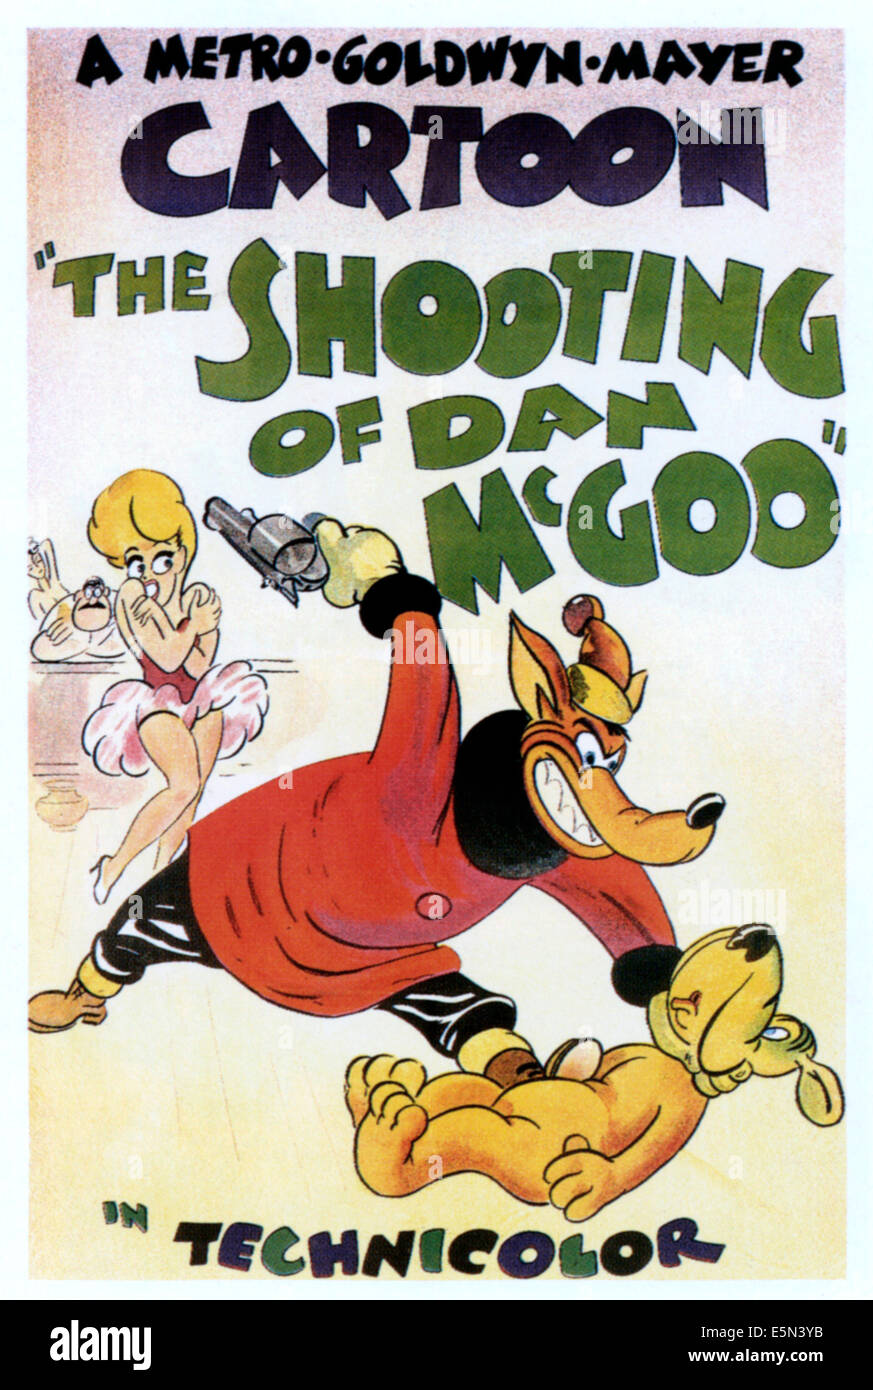 THE SHOOTING OF DAN MCGOO, 1945. Stock Photo